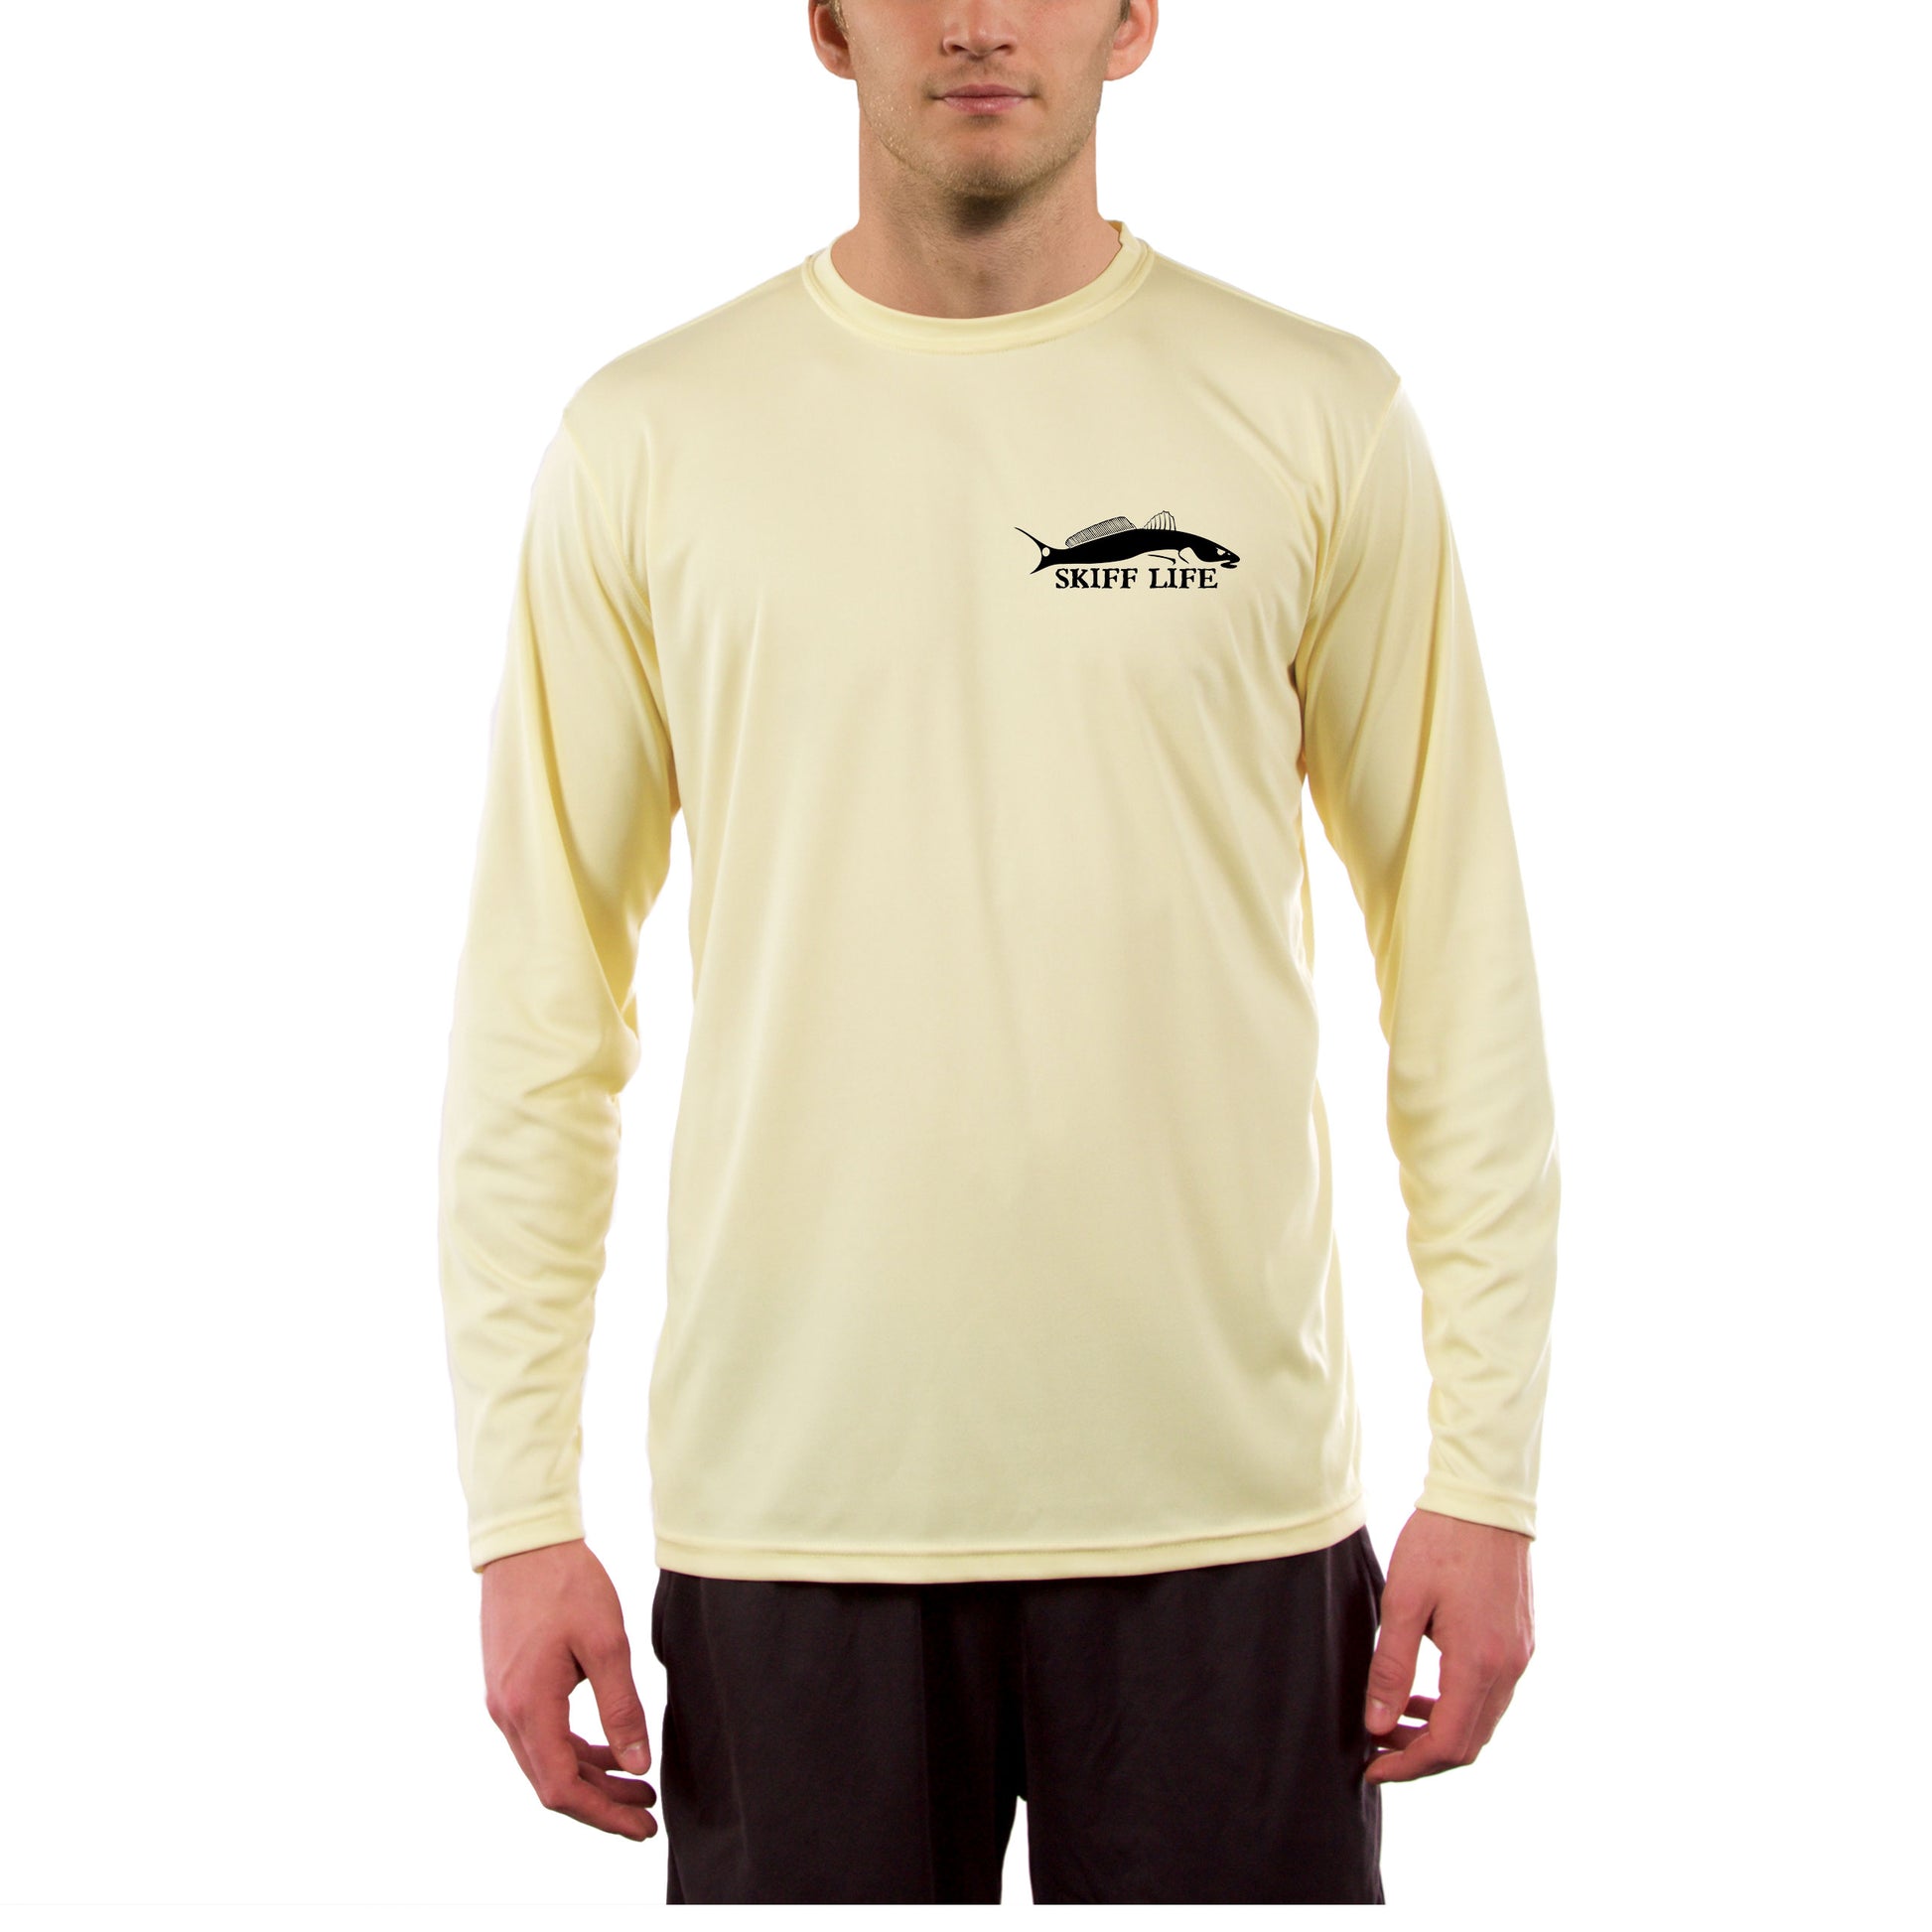 Large Mouth Bass Men's Fishing Shirts - Long Sleeve, Moisture Wicking, Non-fade Print, 50+ UPF Fabric UV Protection Yellow / 2XL